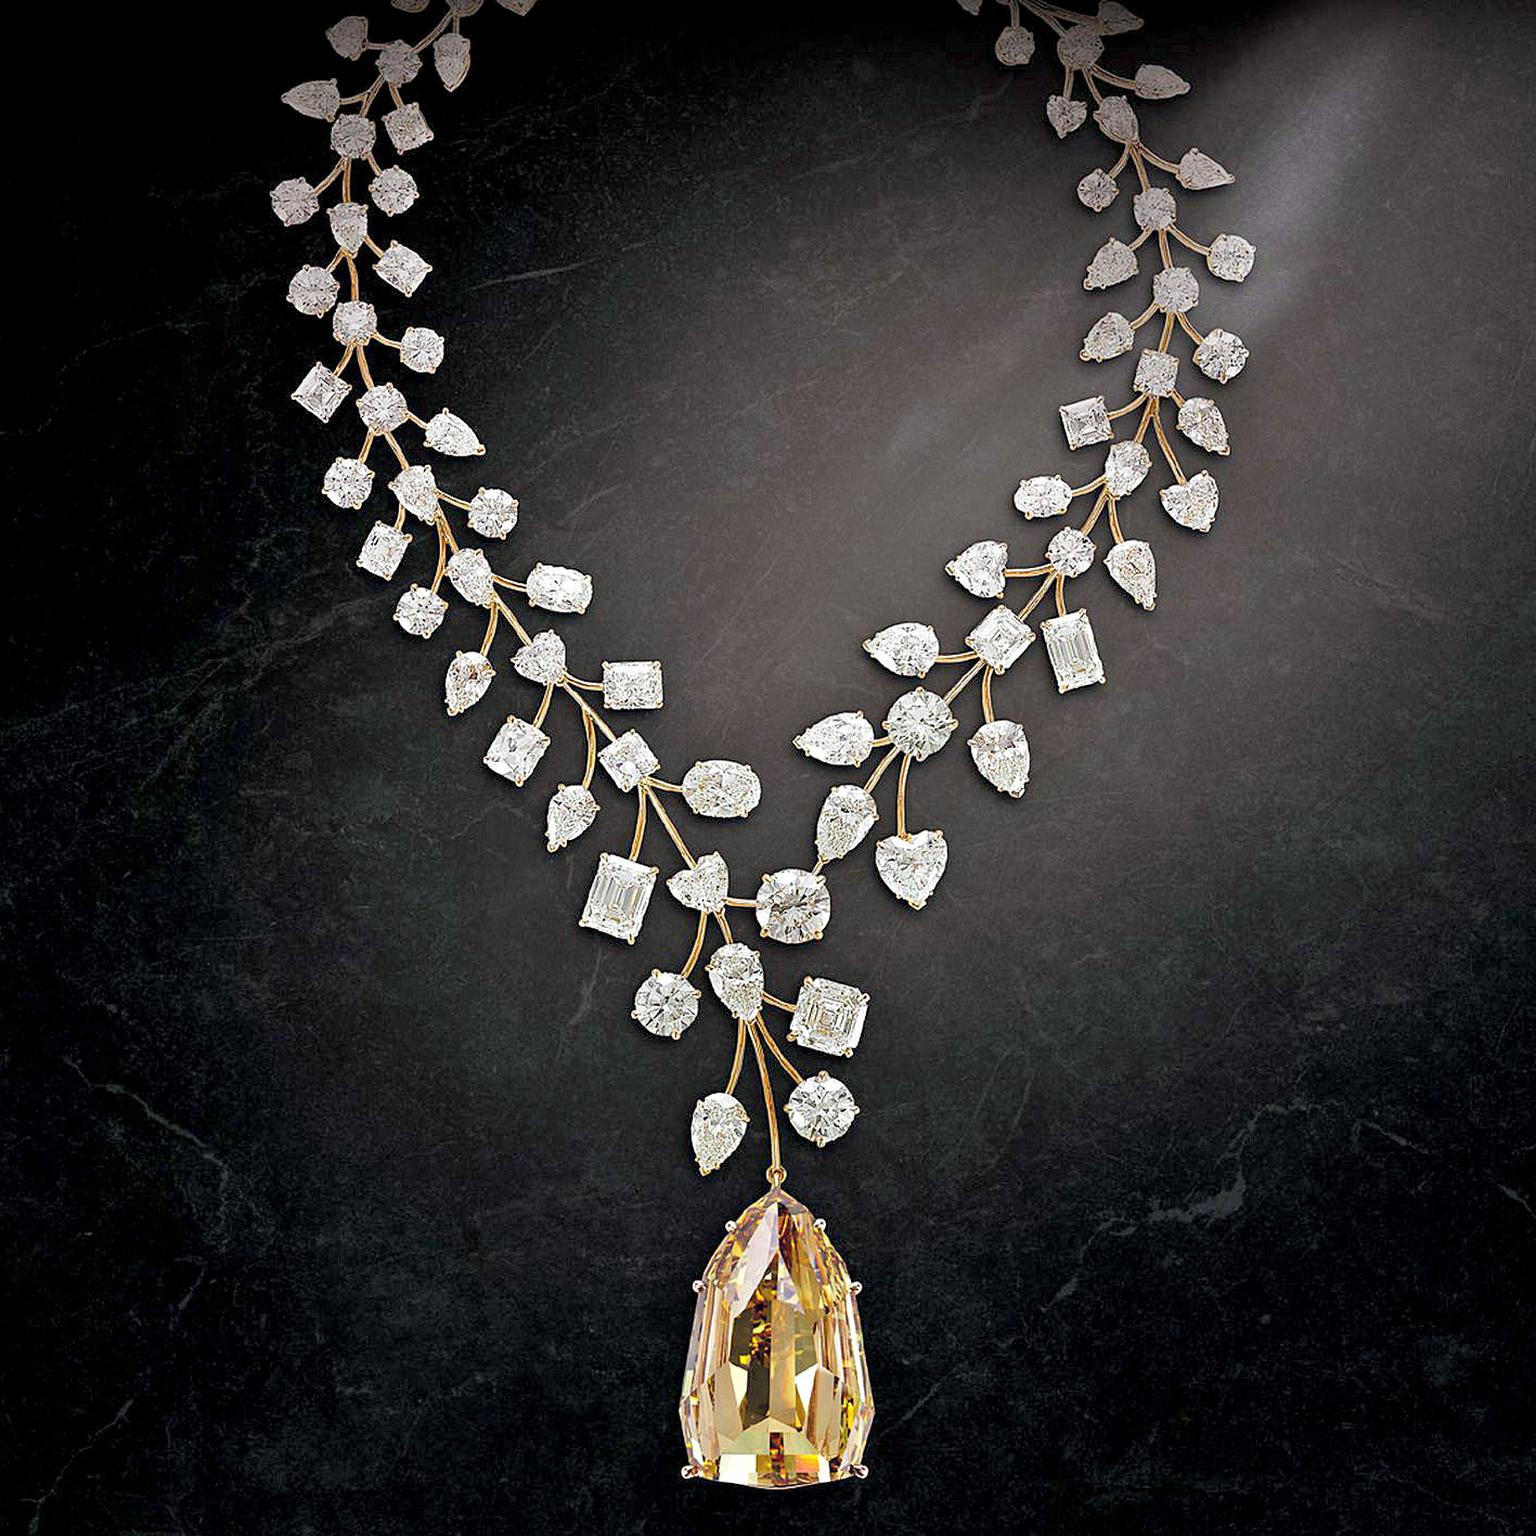 Palladium Circle Pendant with Champagne Diamond - EC Design Jewelry